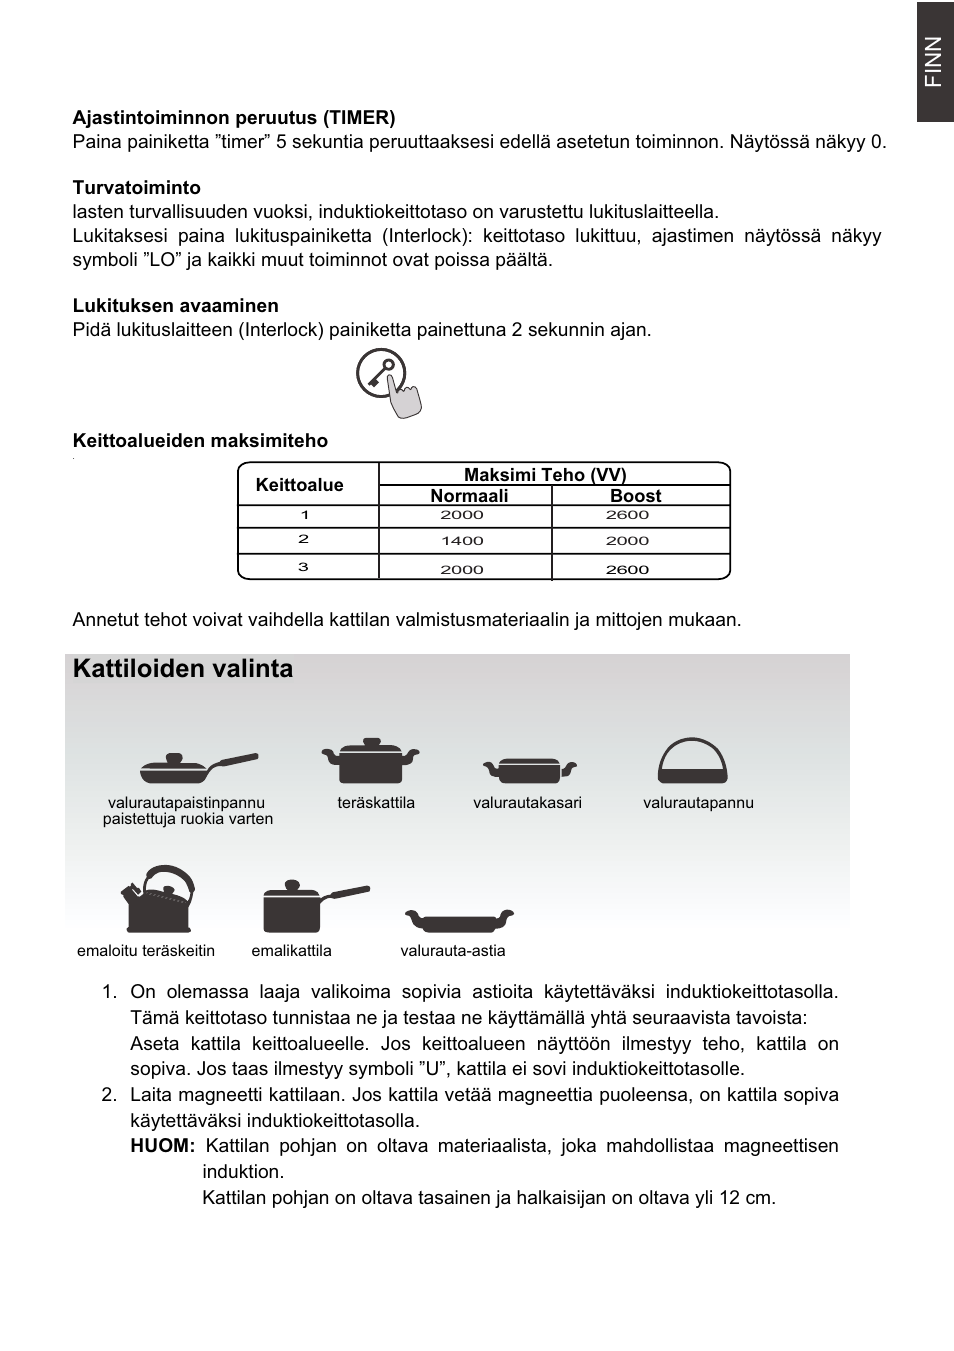 Kattiloiden valinta, Finn | Инструкция по эксплуатации Candy PVI 633 B | Страница 55 / 131